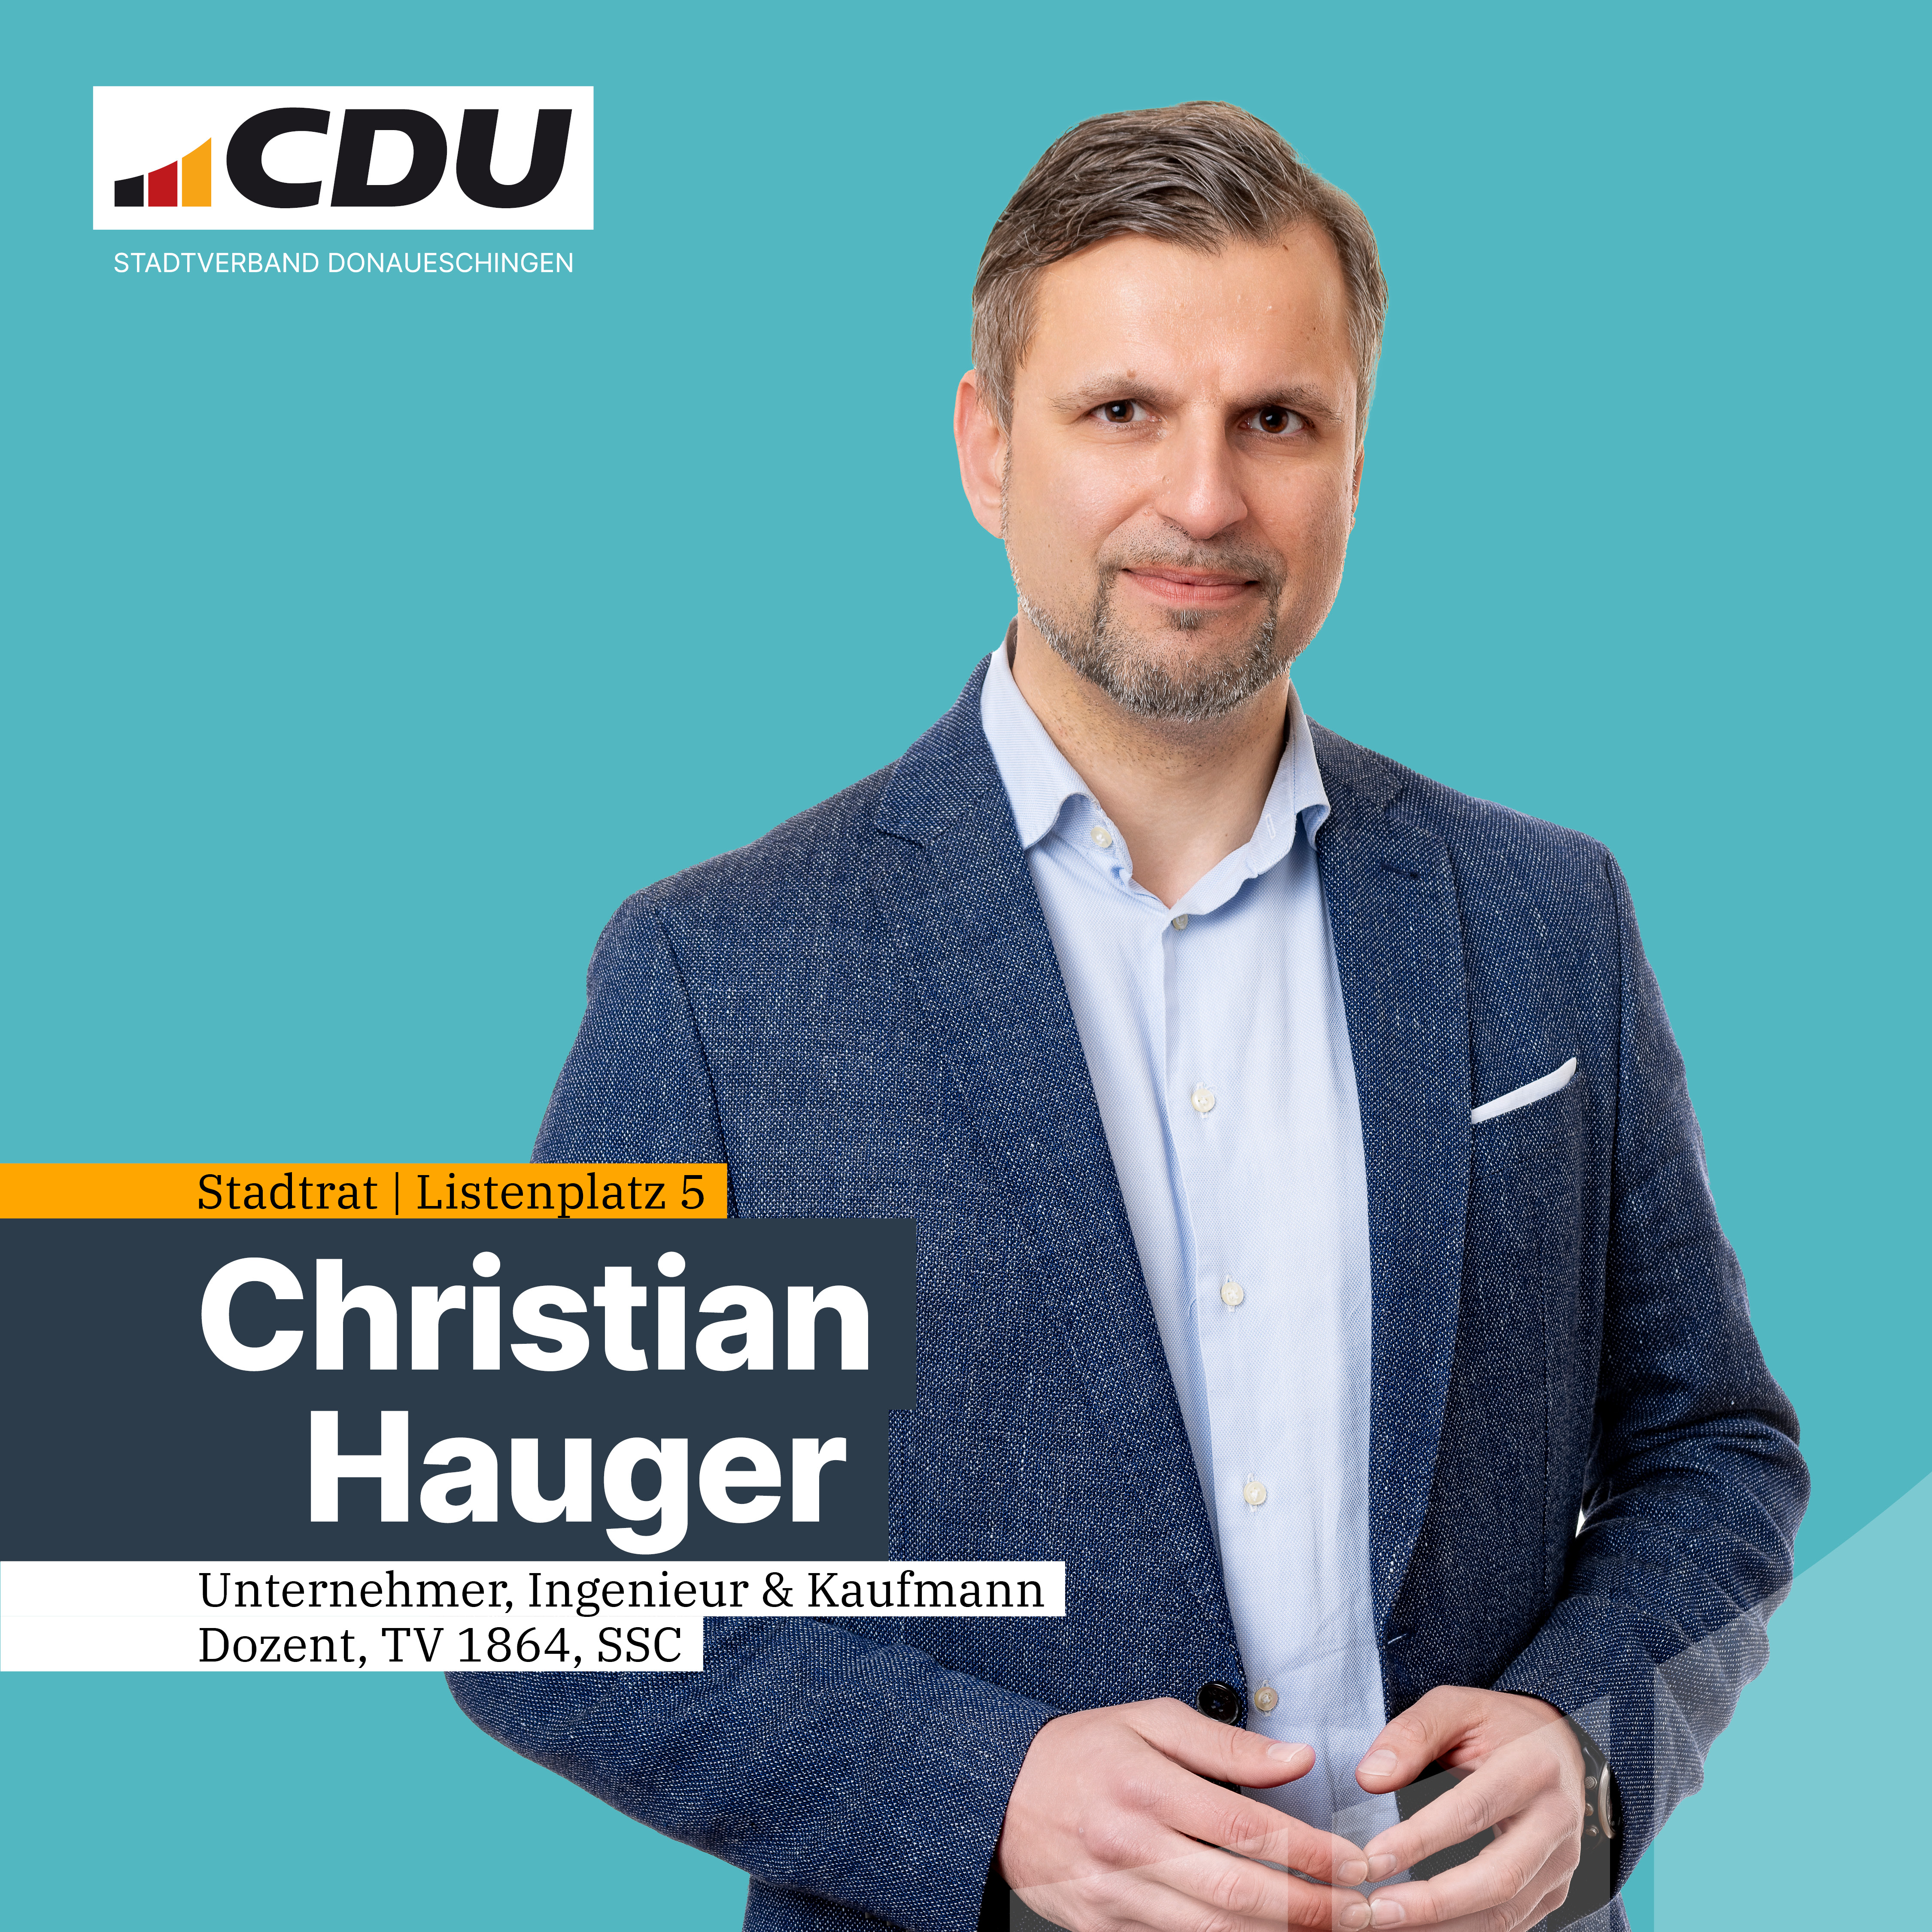  Christian Hauger